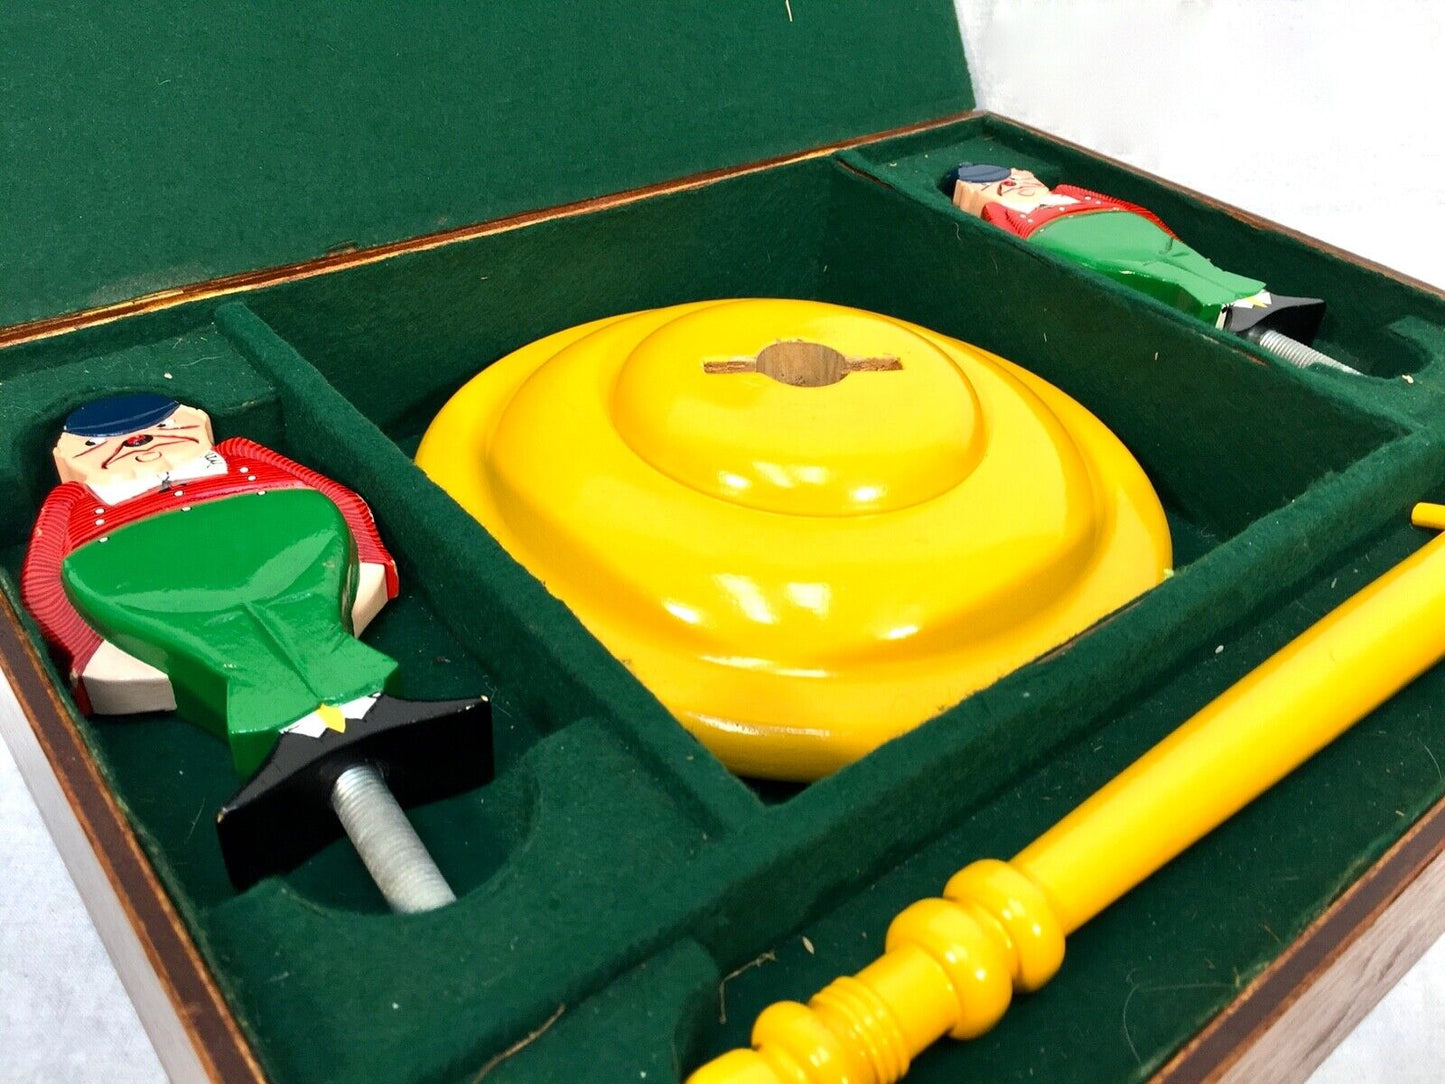 Vintage Tweedledum and Tweedledee Homemade Toy in Presentation Box / Antique